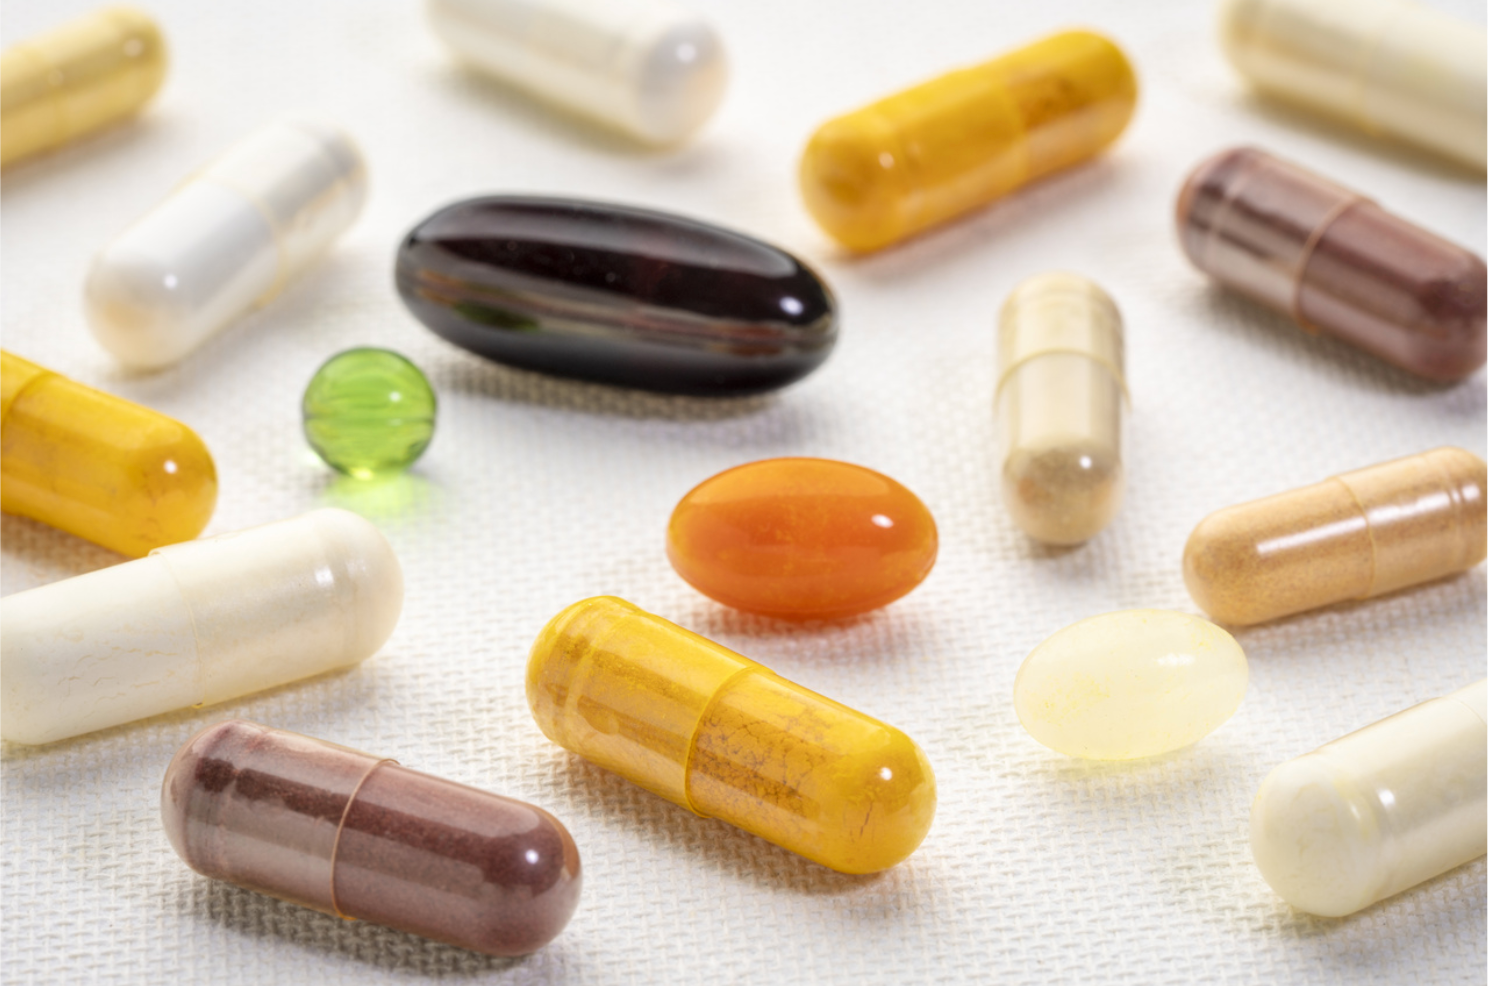 European Generic Medication Shortages Raise Concerns About US Drug Supply